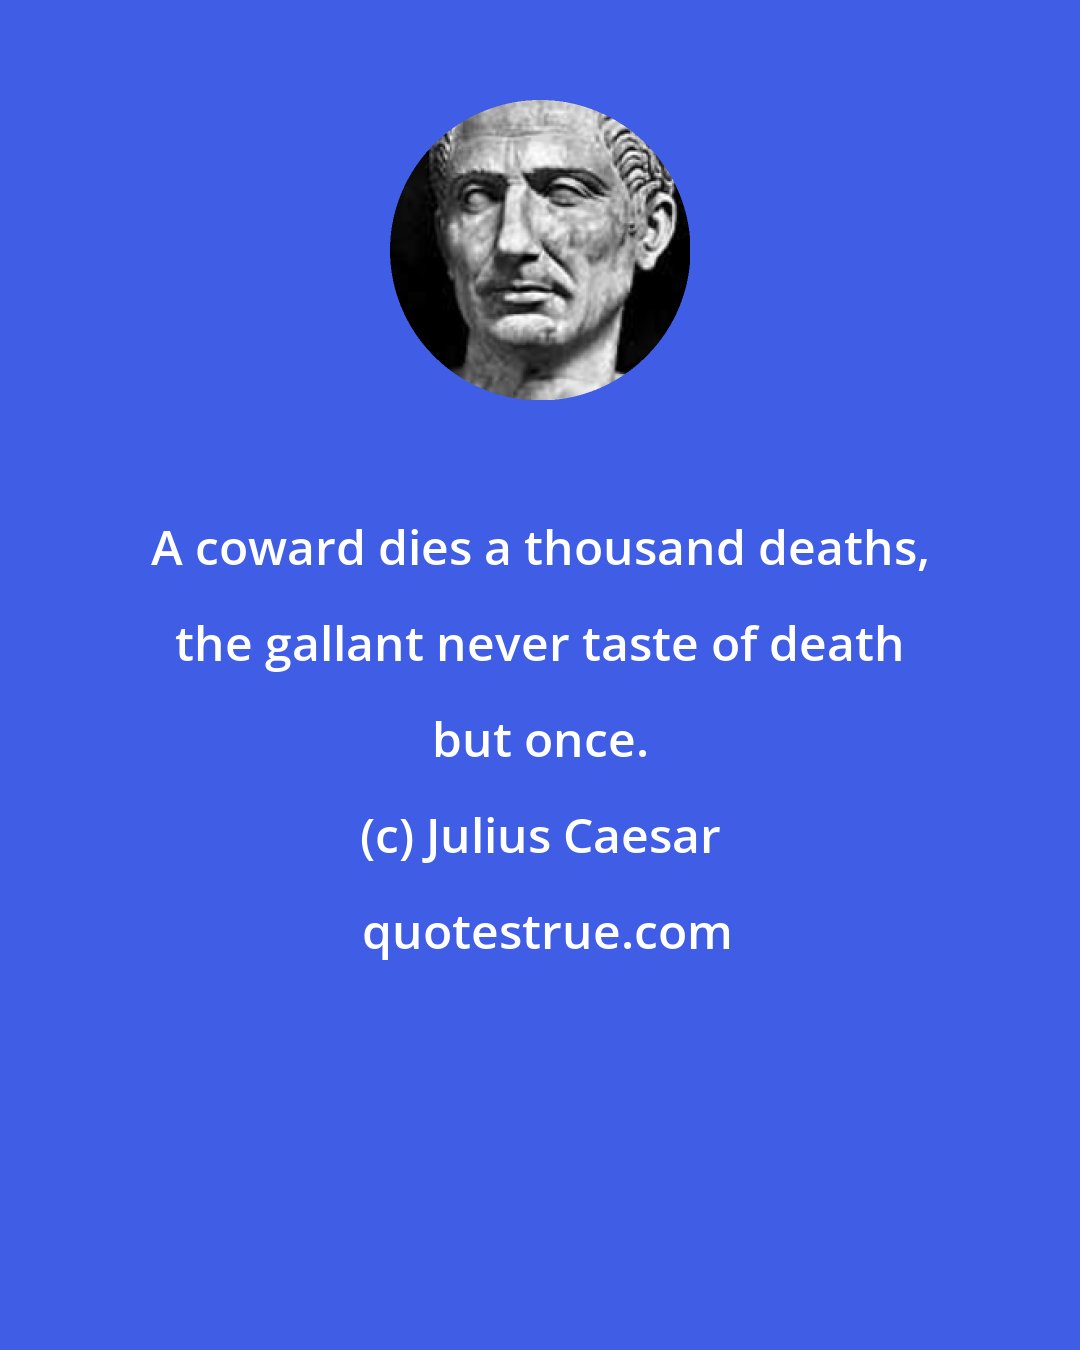 Julius Caesar: A coward dies a thousand deaths, the gallant never taste of death but once.